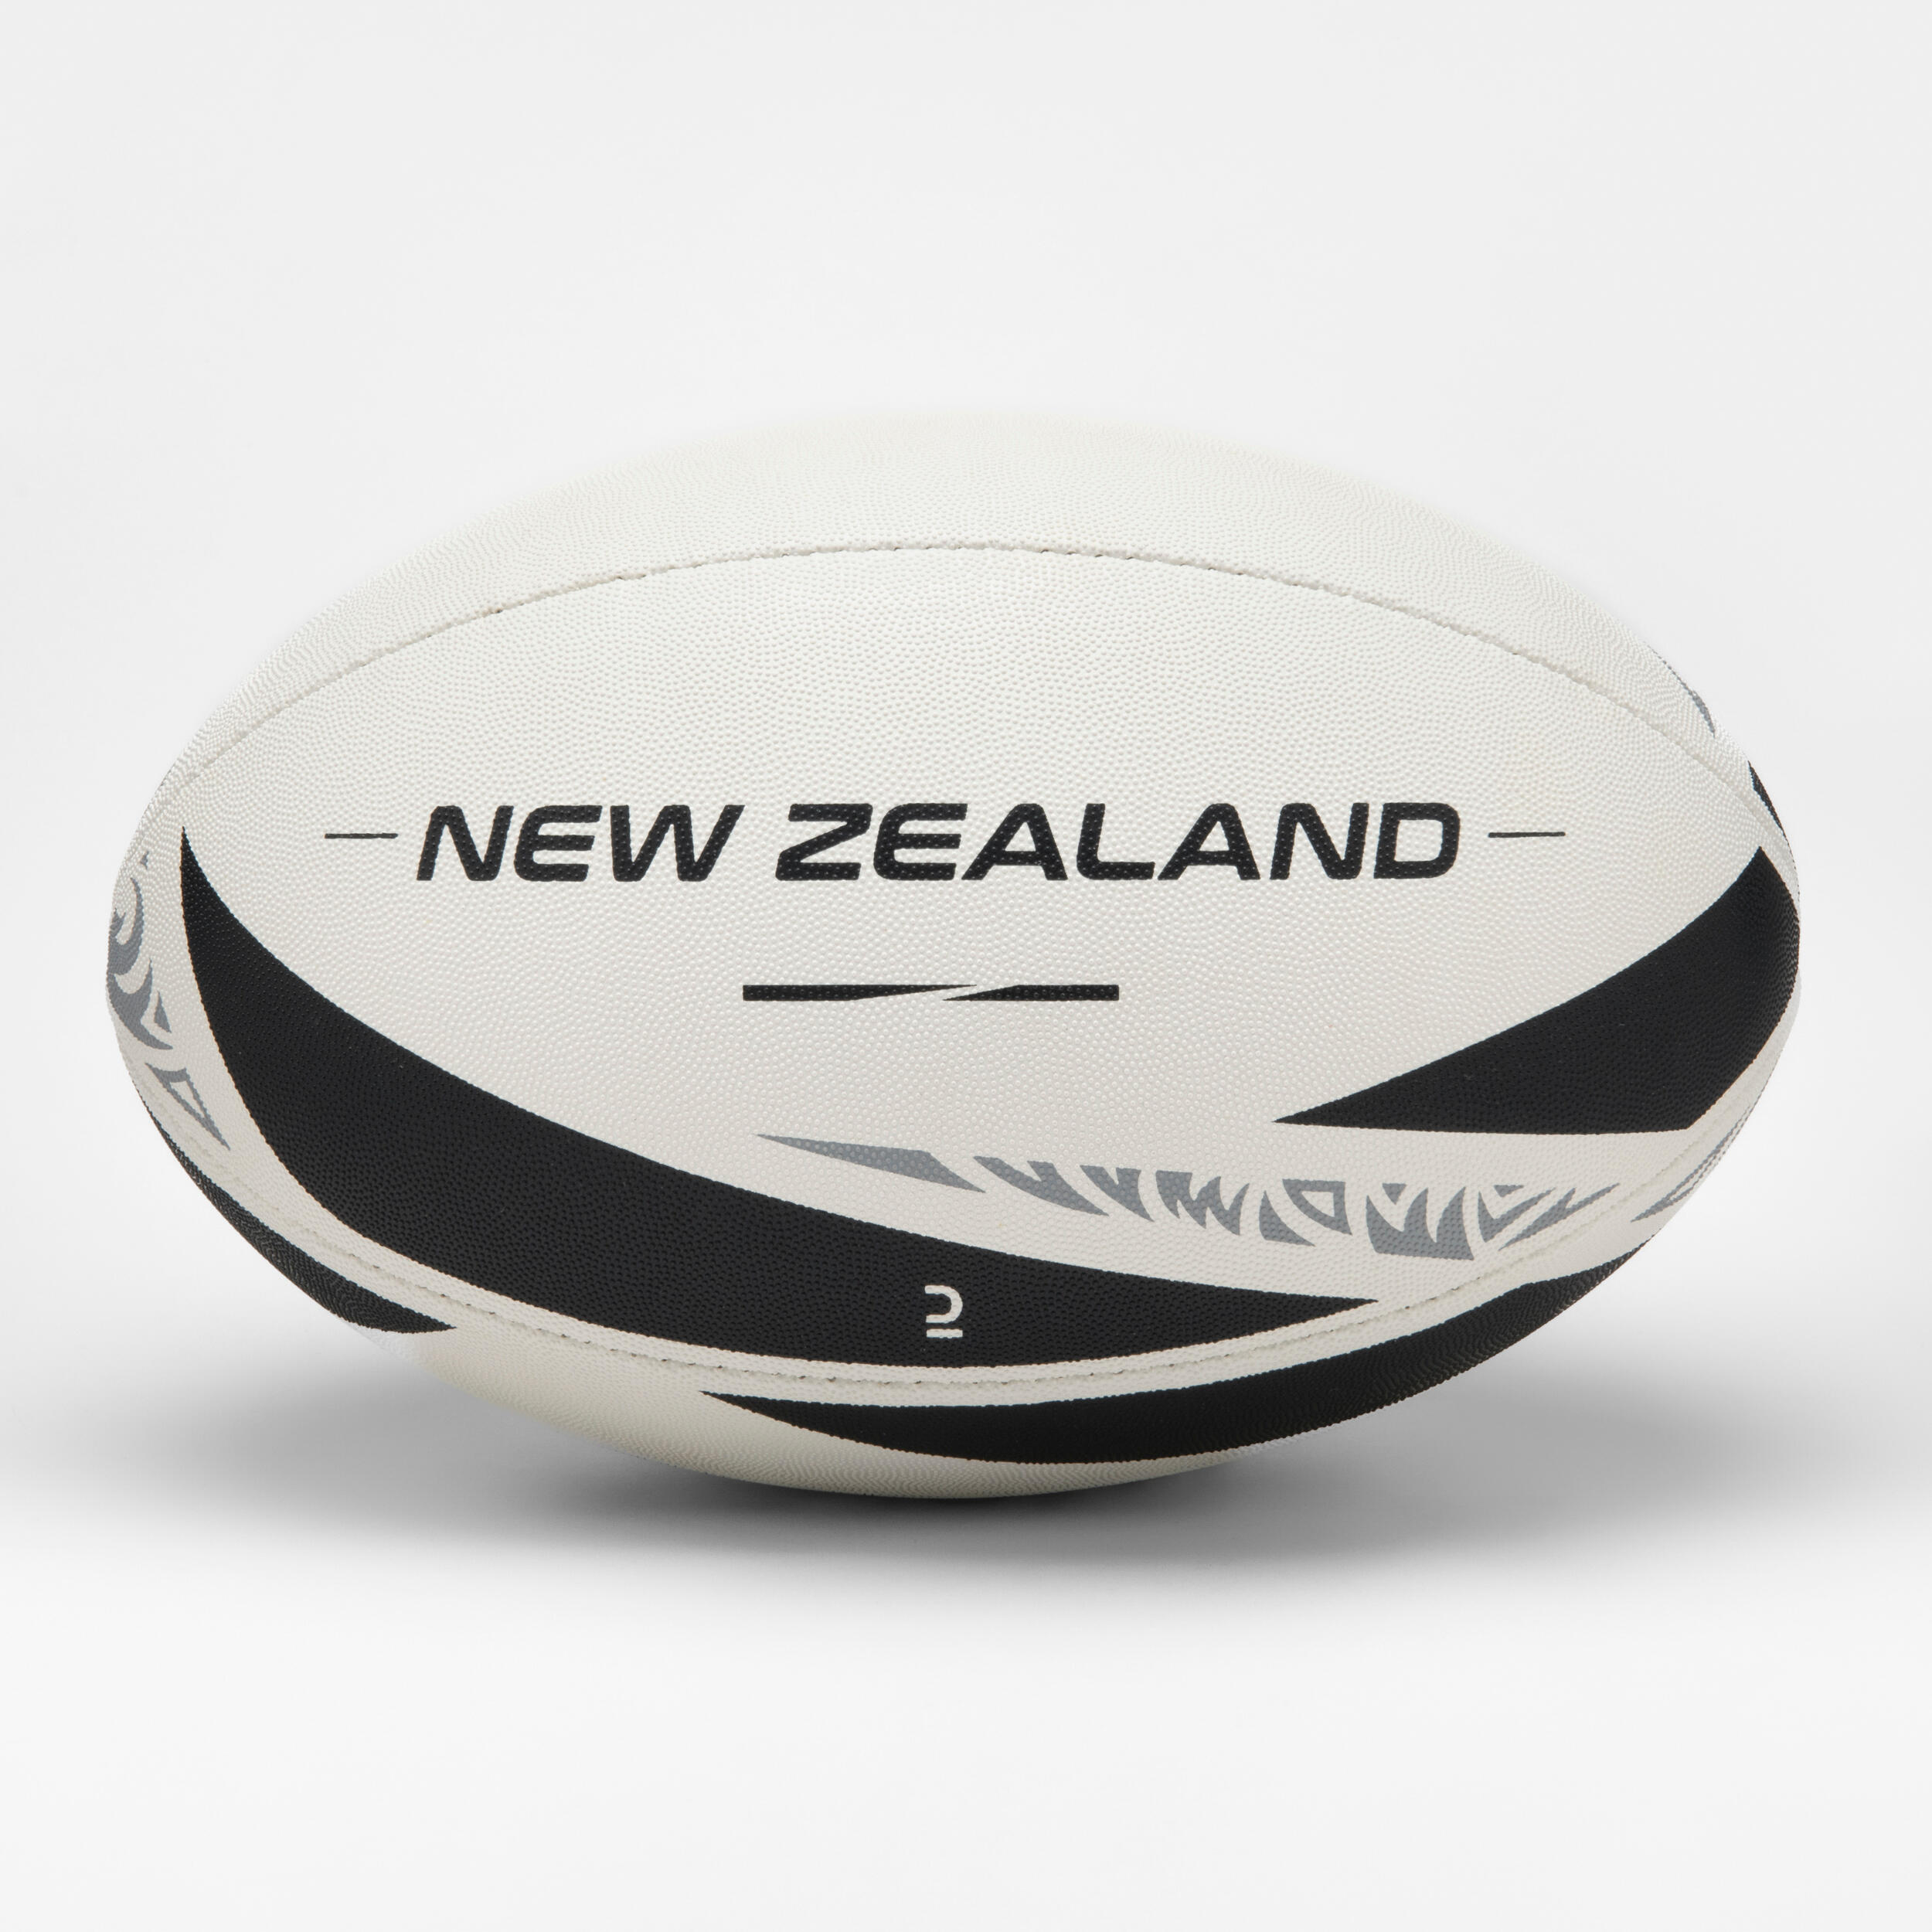 Minge Rugby Replica Noua Zeelanda Marimea 5 image2